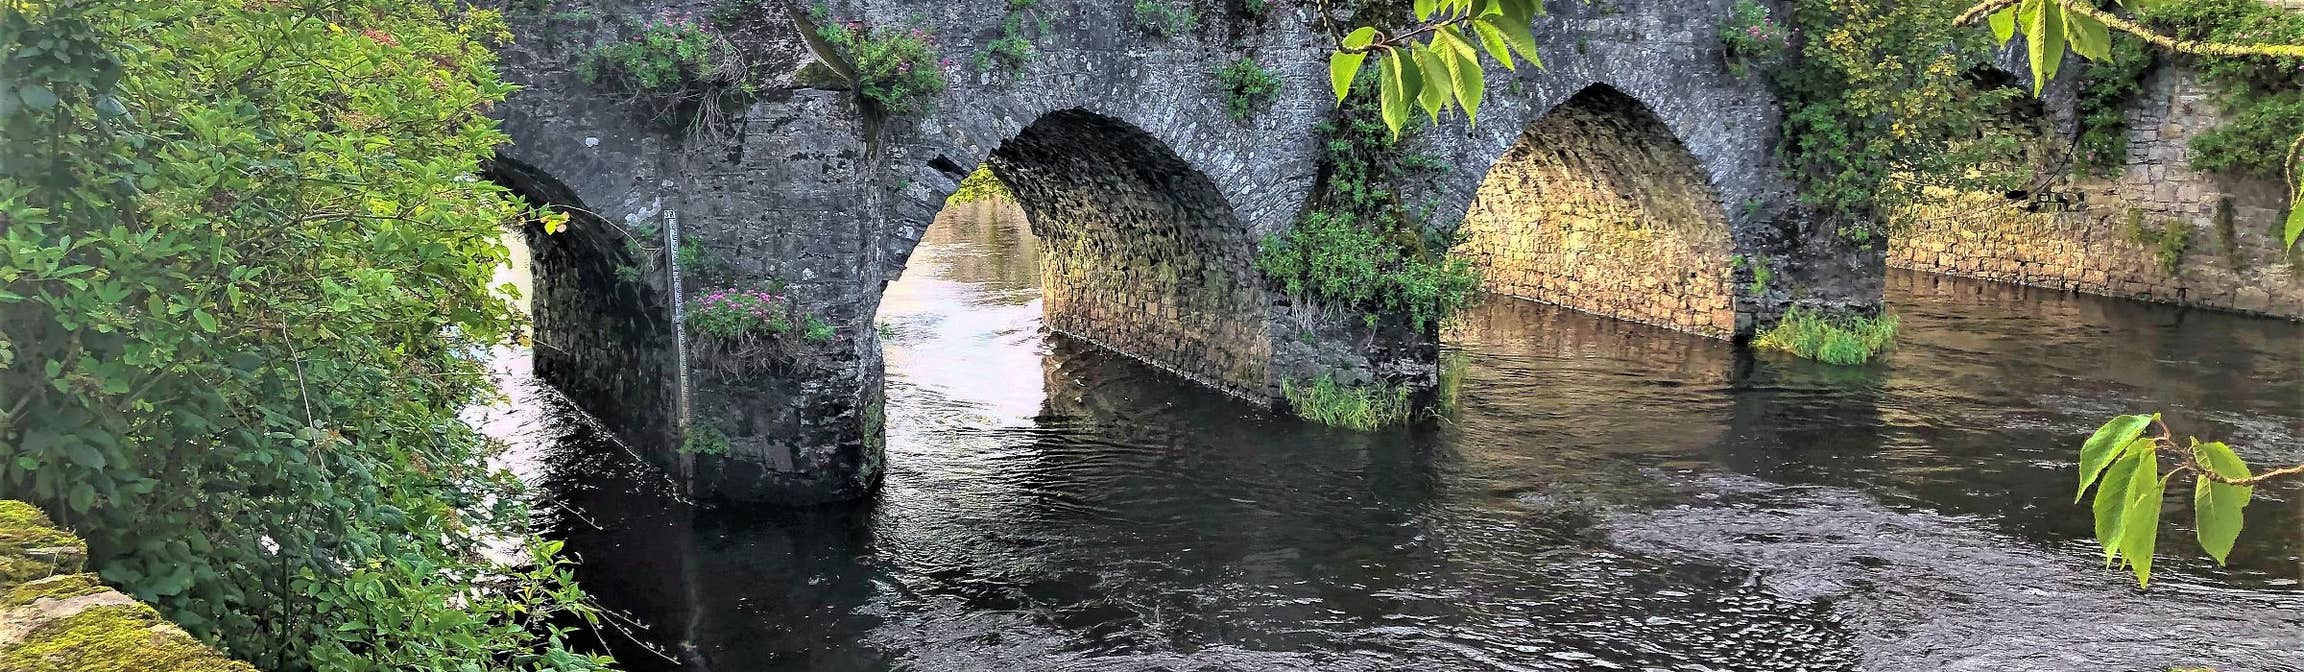 Bridge in Trim, County Meath